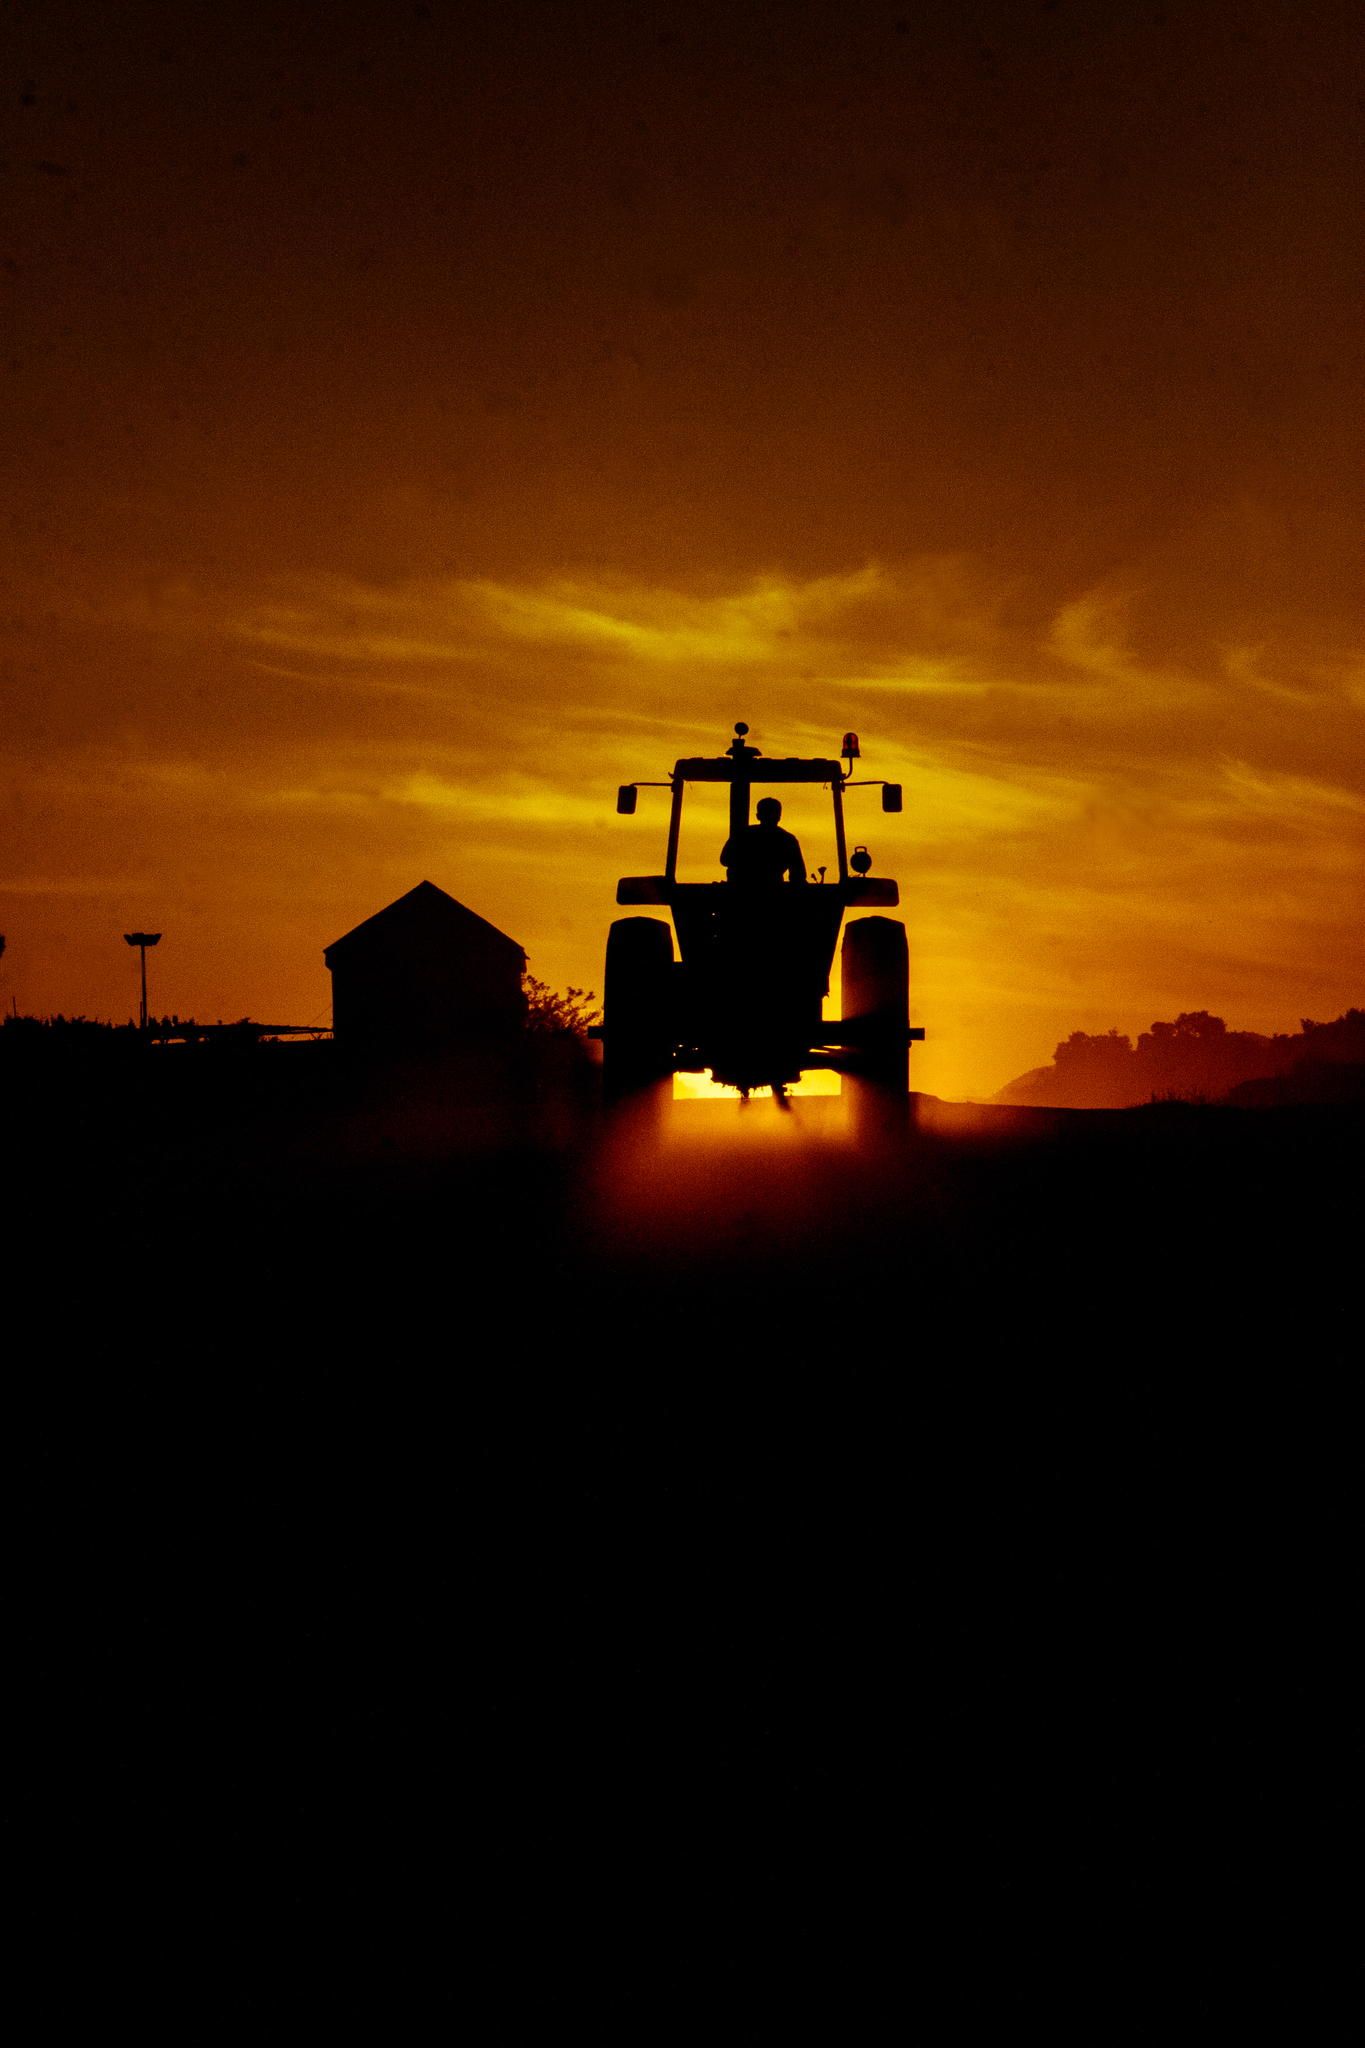 Untitled by Hassan Haji | on the farm | Pinterest | Sunset, Farming ...